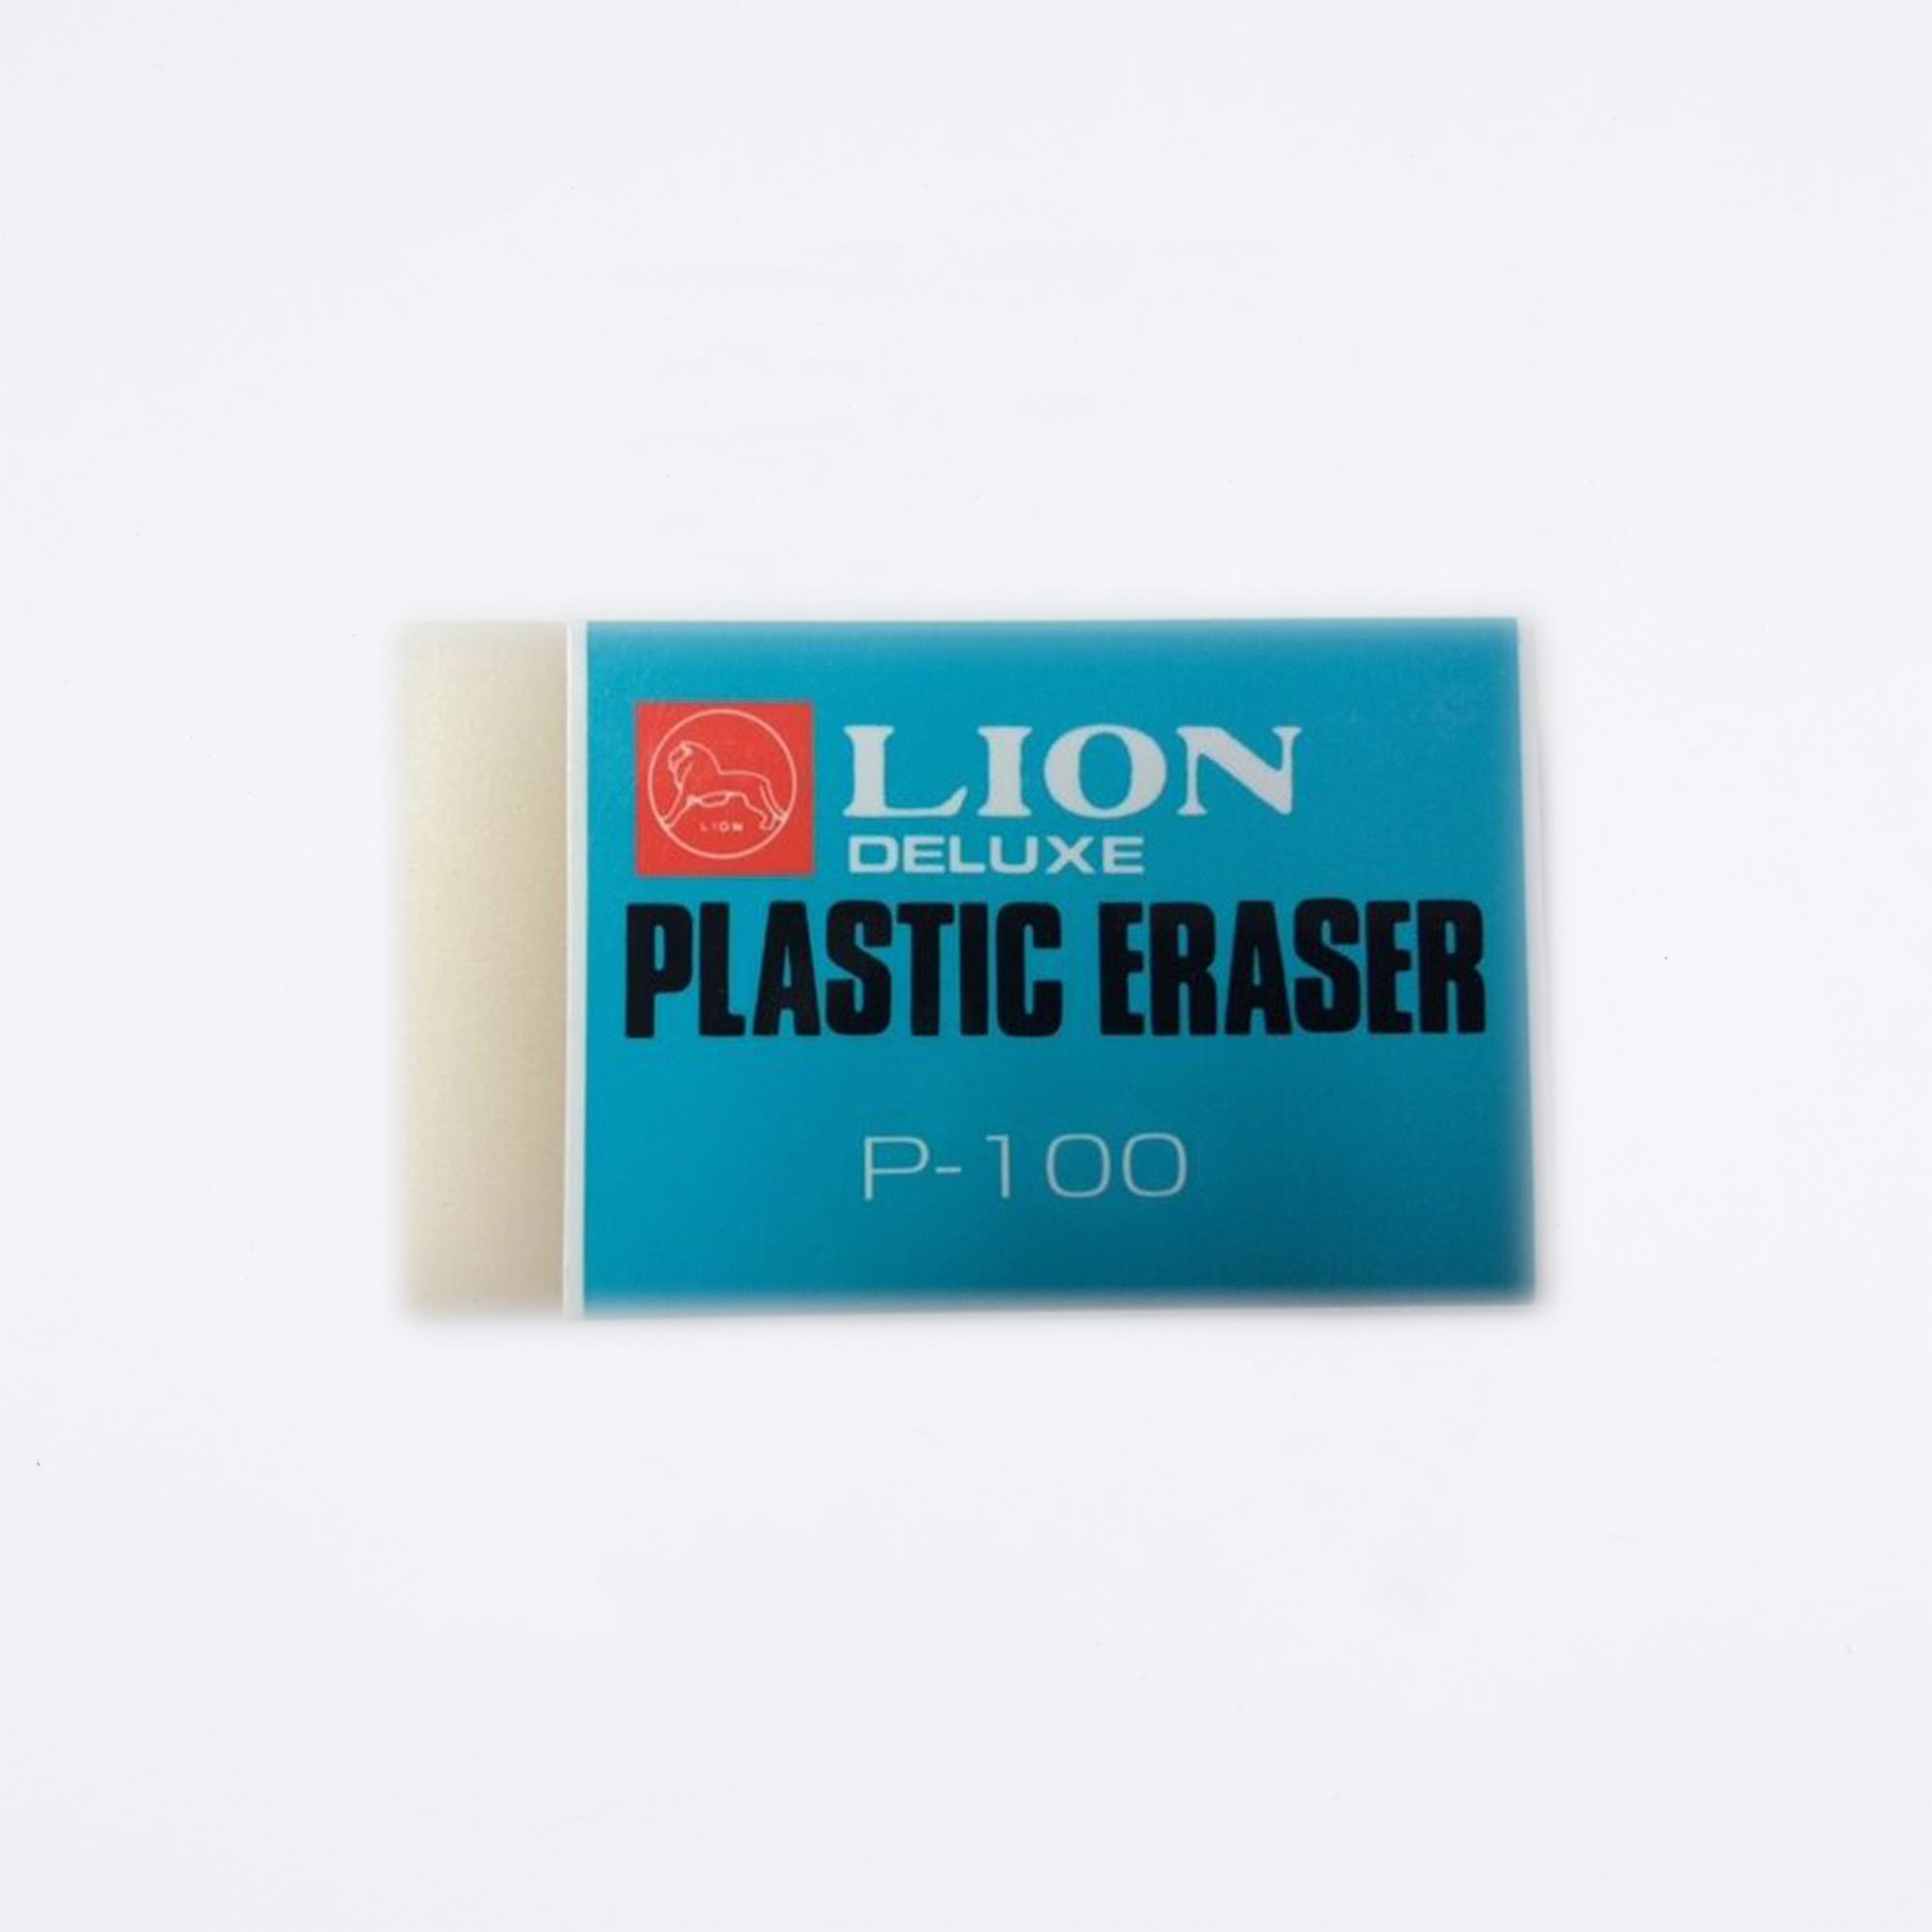 1 LION ERASER JUMBO SOFT PLASTIC PENCIL WRITING ERASER P-1000 FREE  SHIPPING!